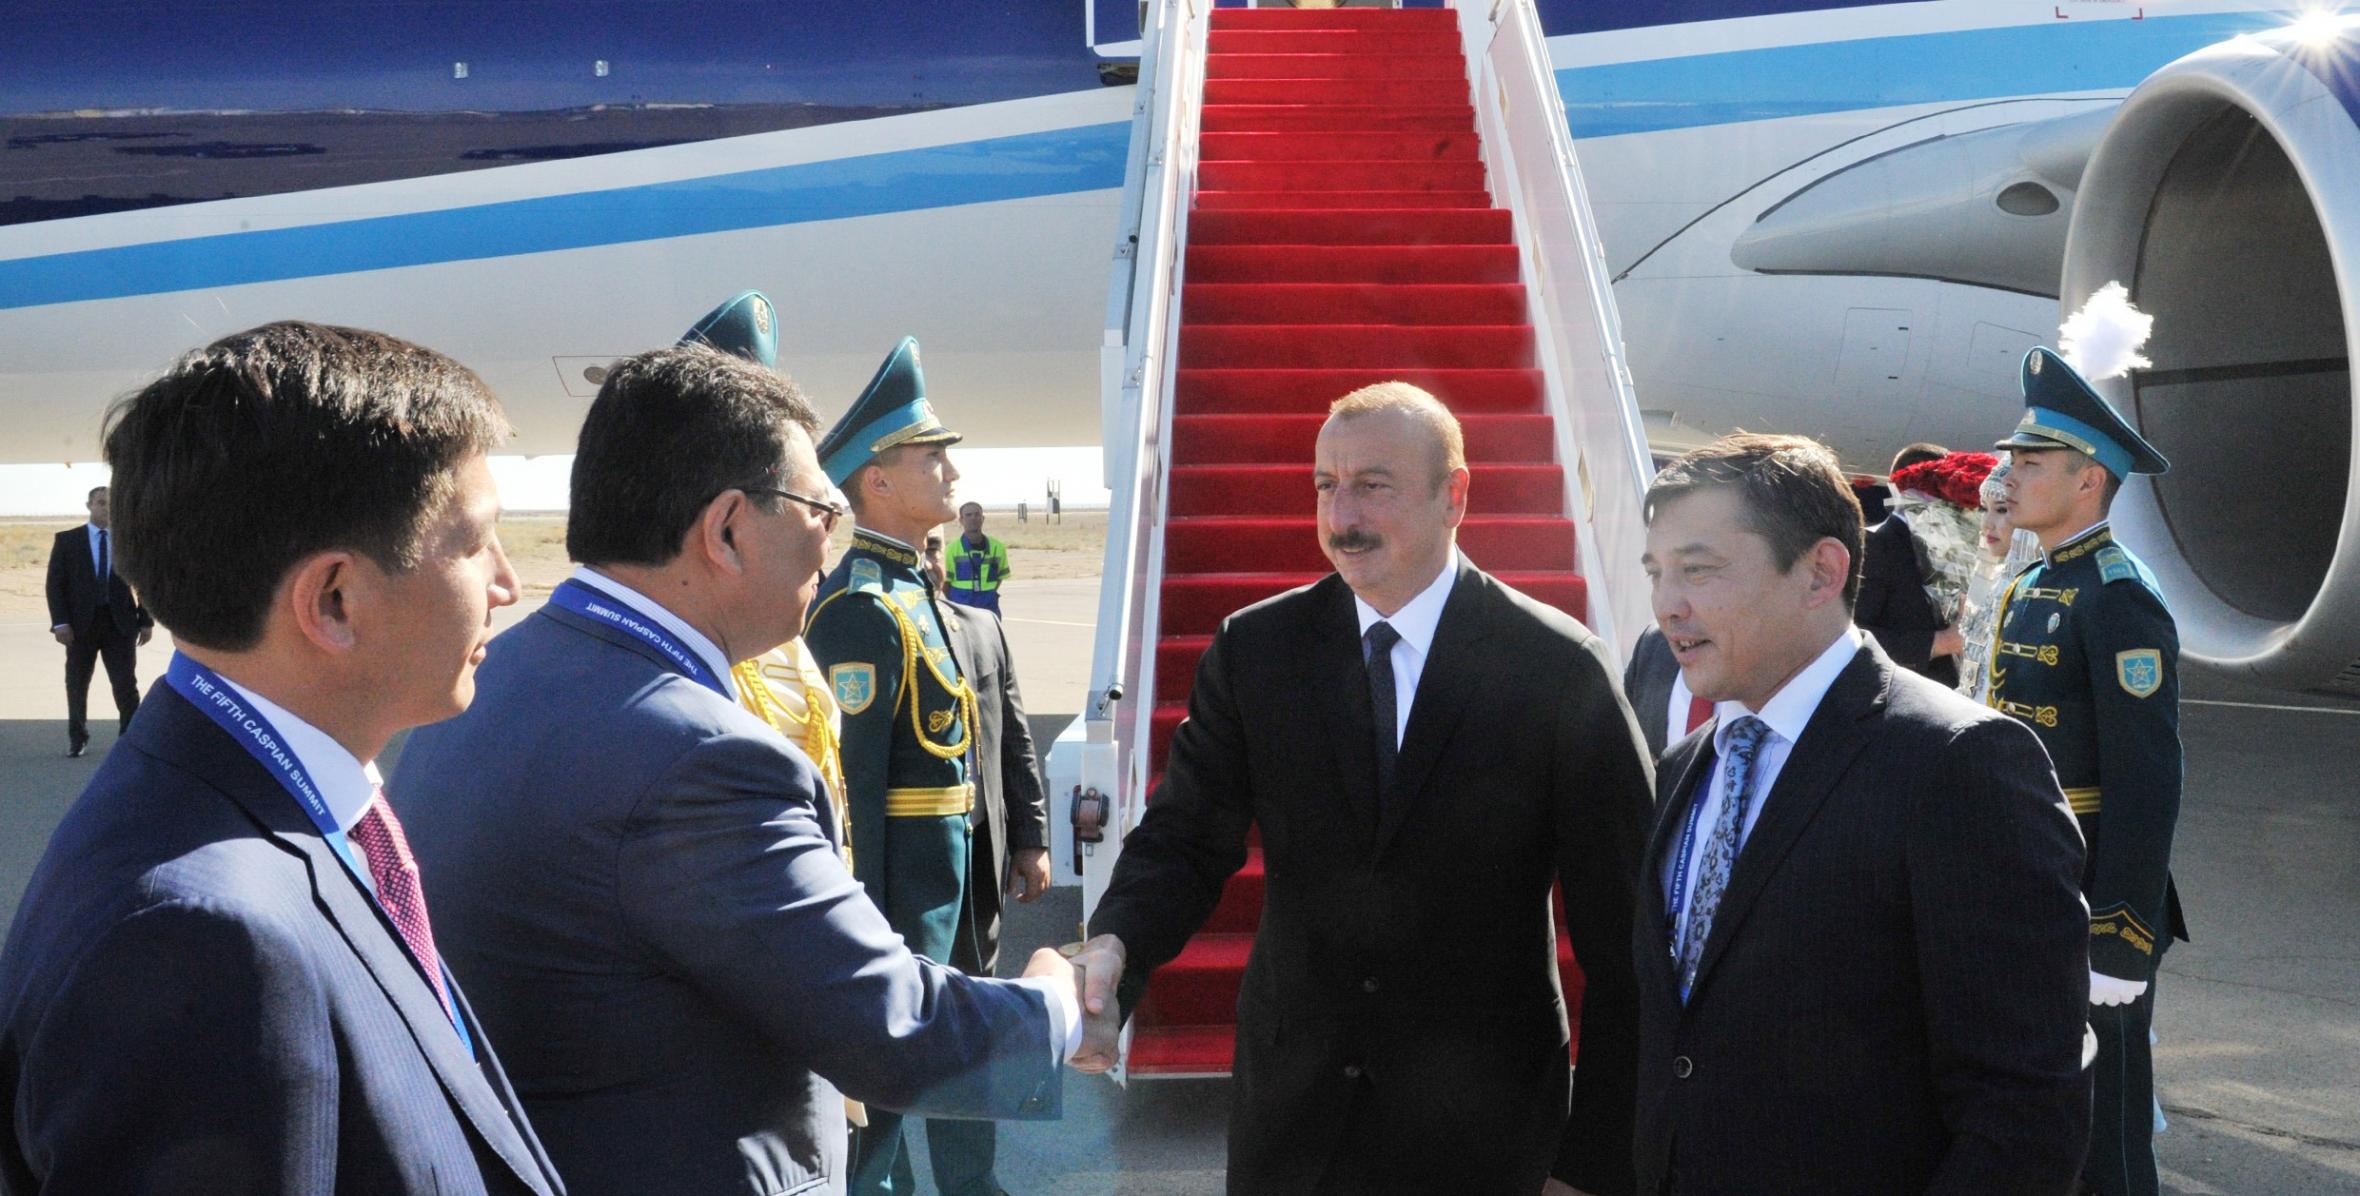 Ilham Aliyev arrived in the Kazakh city of Aktau